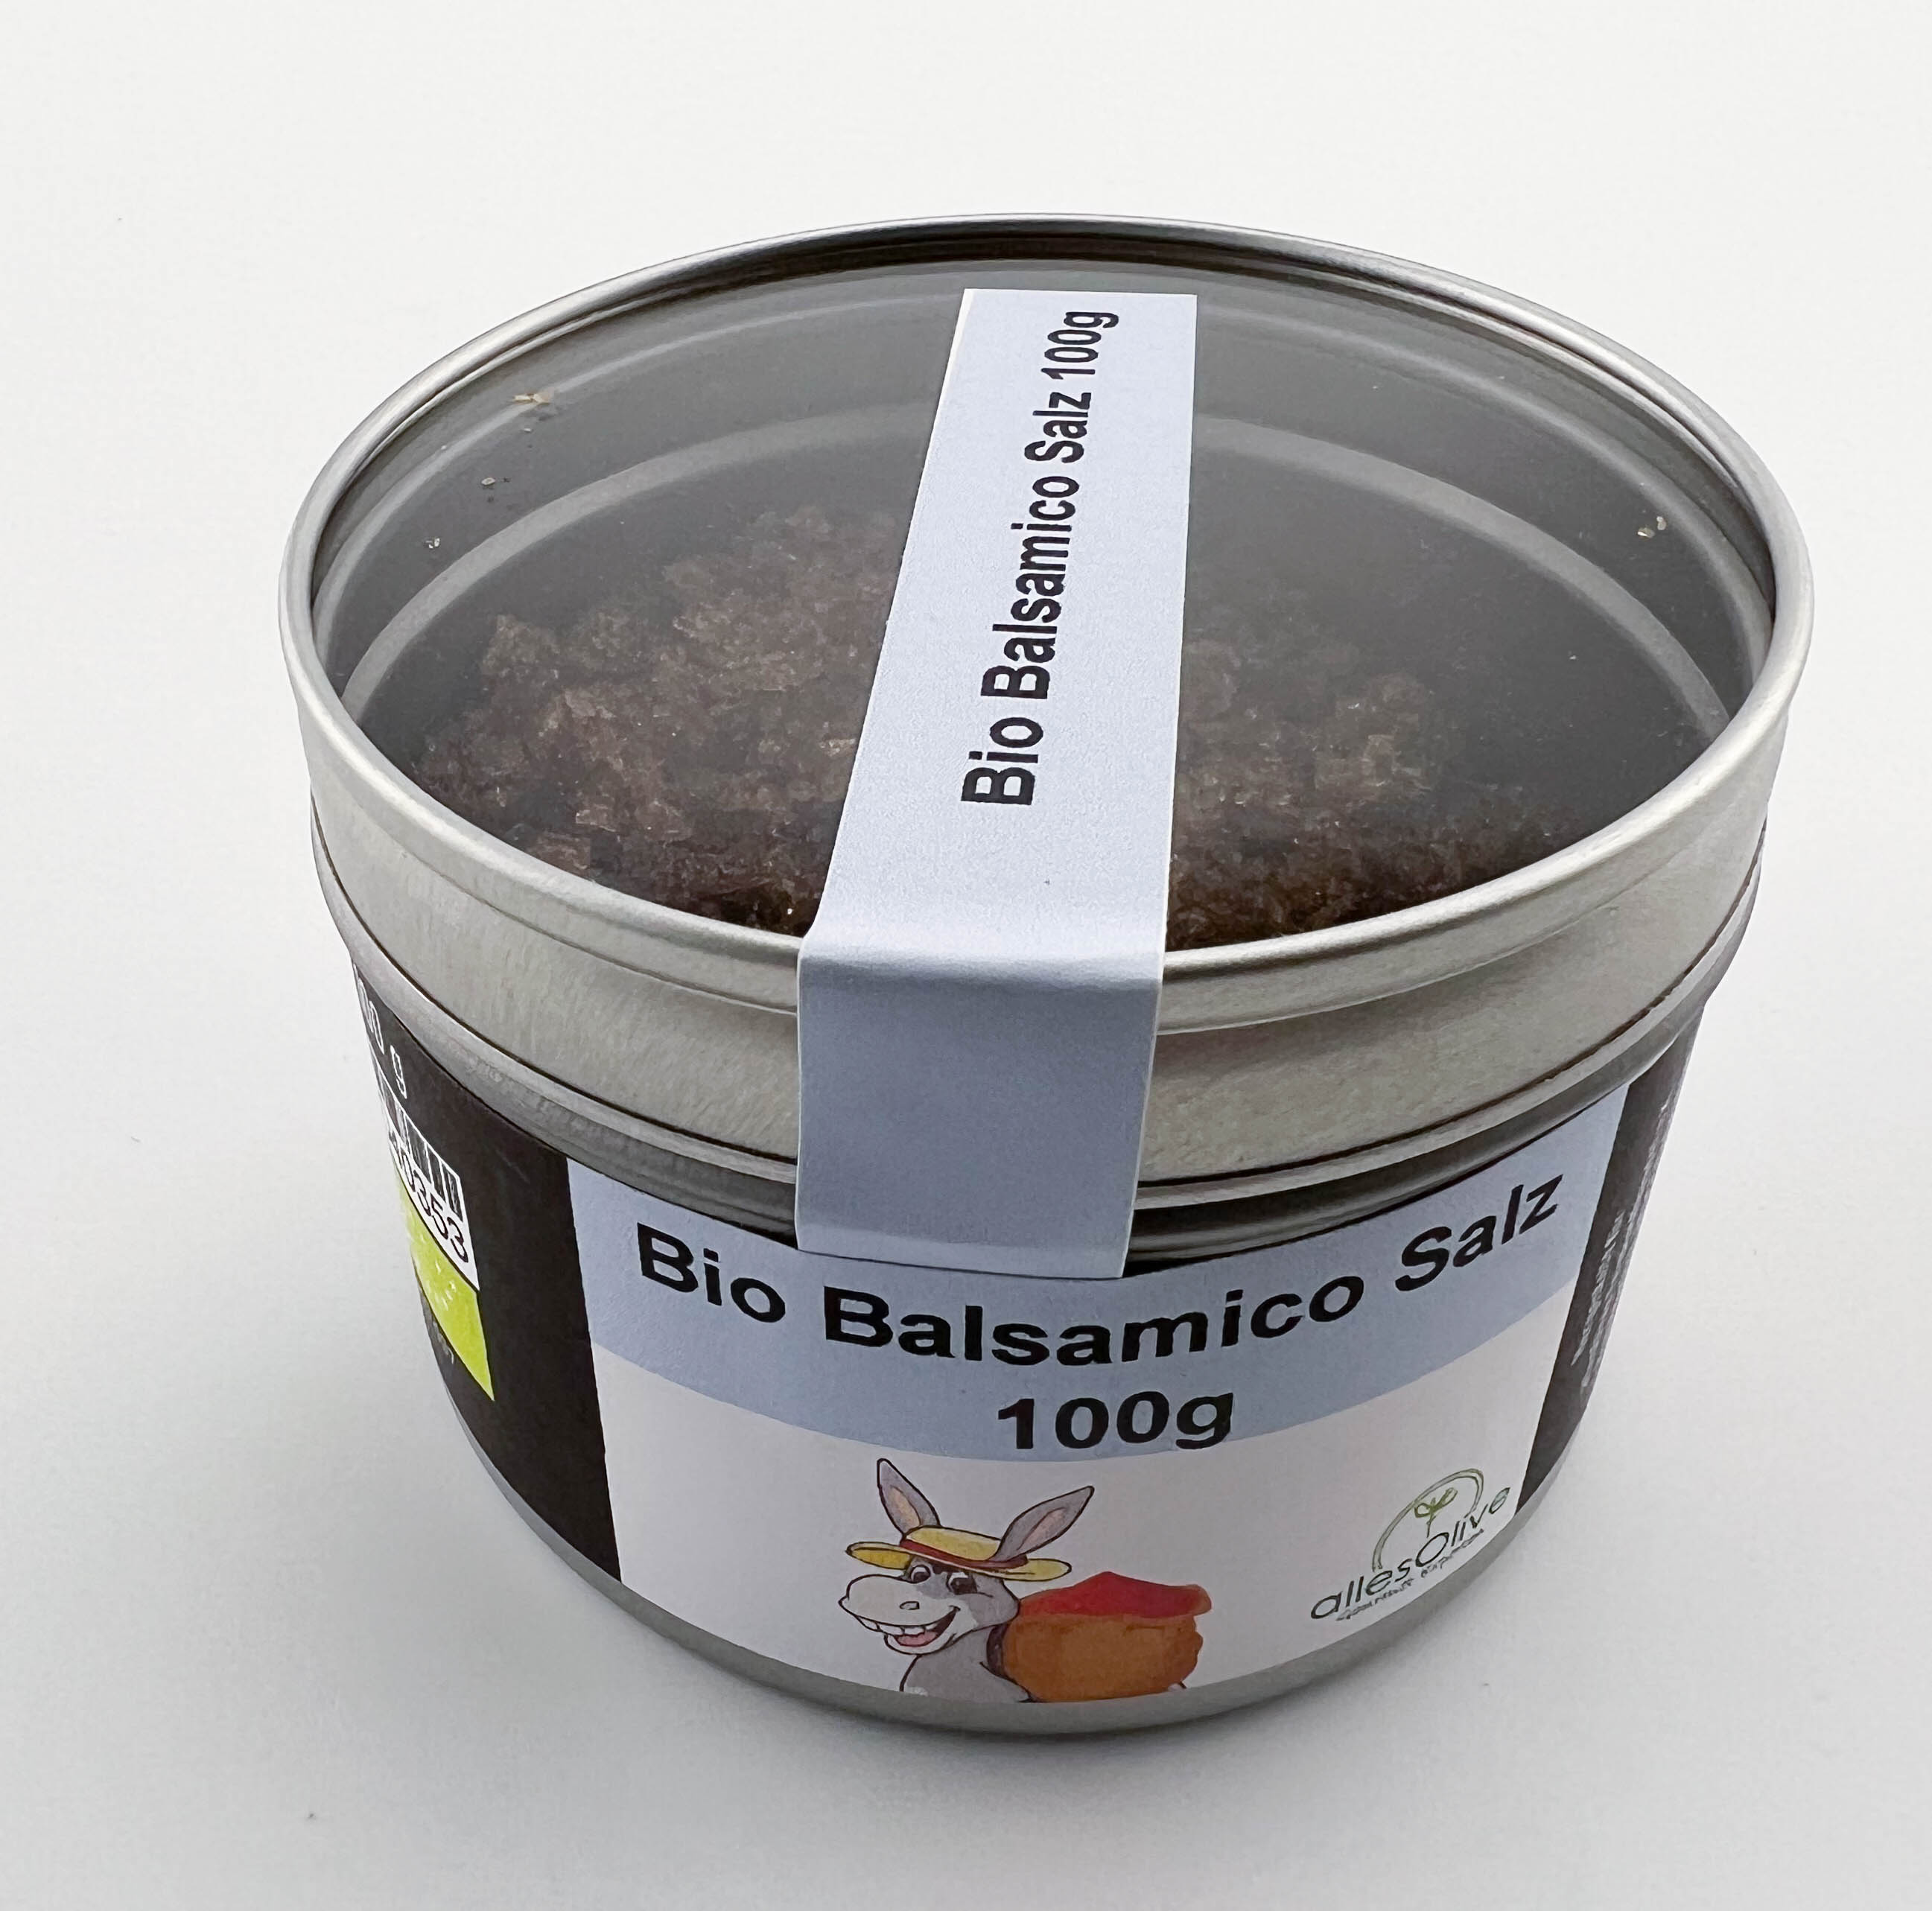 Sale al Balsamico Biologico 100g